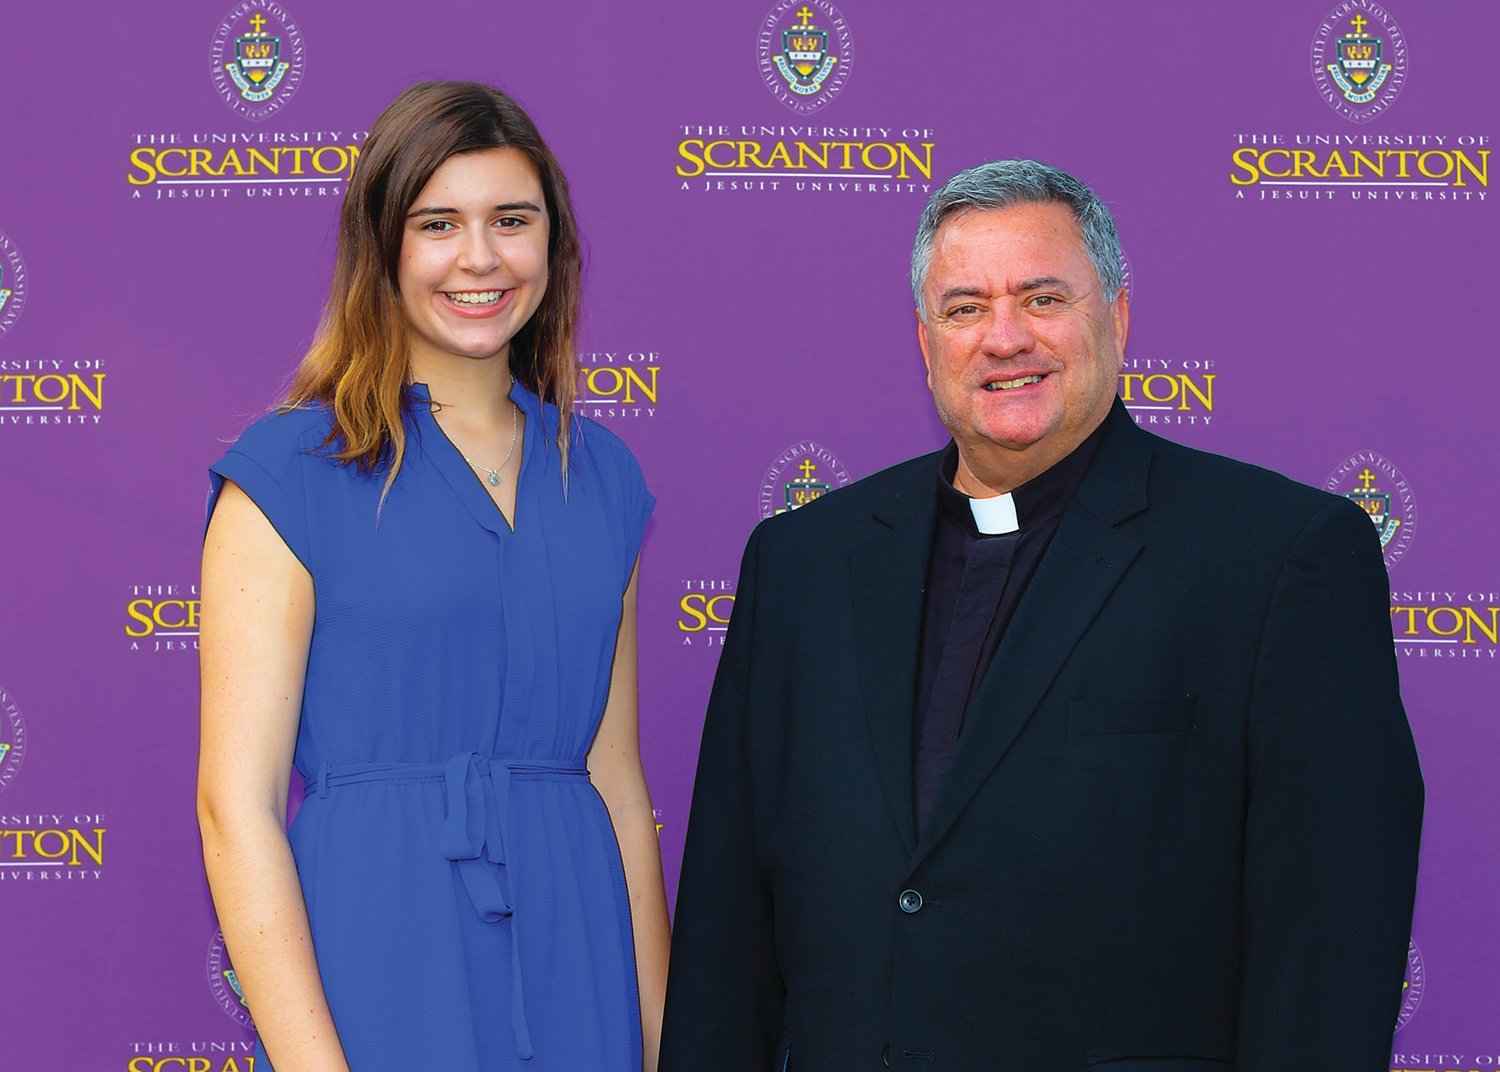 Grace McDonald with University of Scranton President Rev. Joseph Marina.